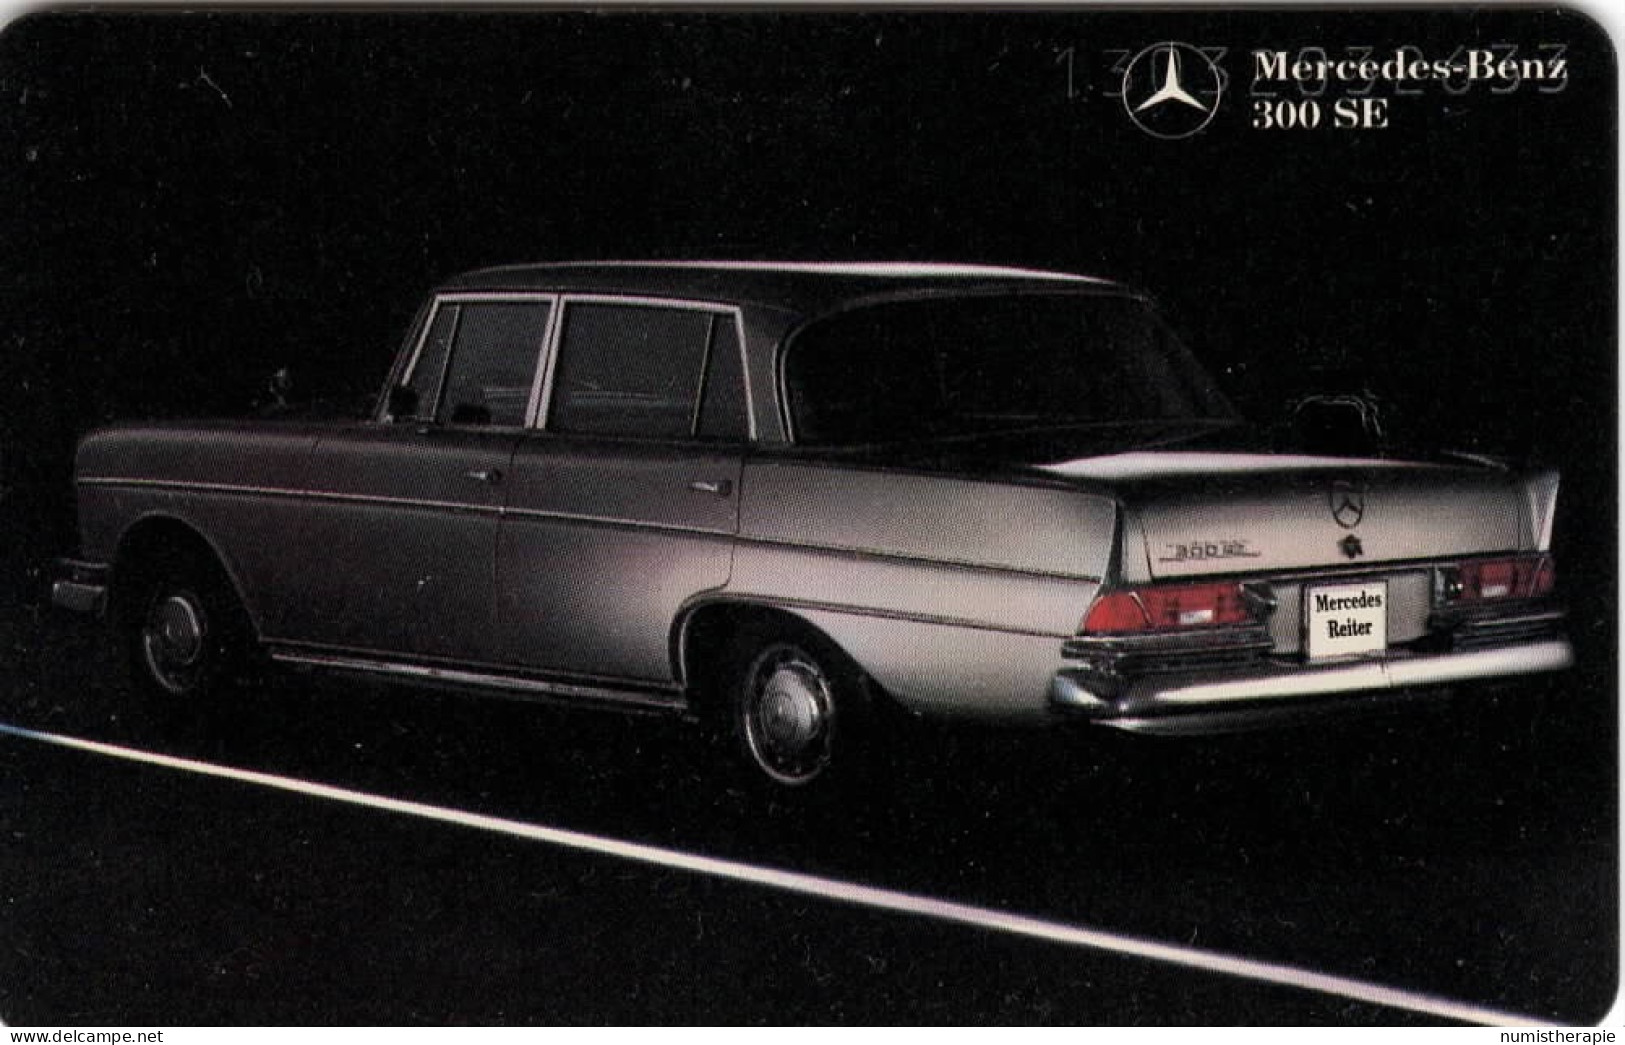 Mercedez Benz 300 SE : Telefonkarte 6 DM 1993 - Autos